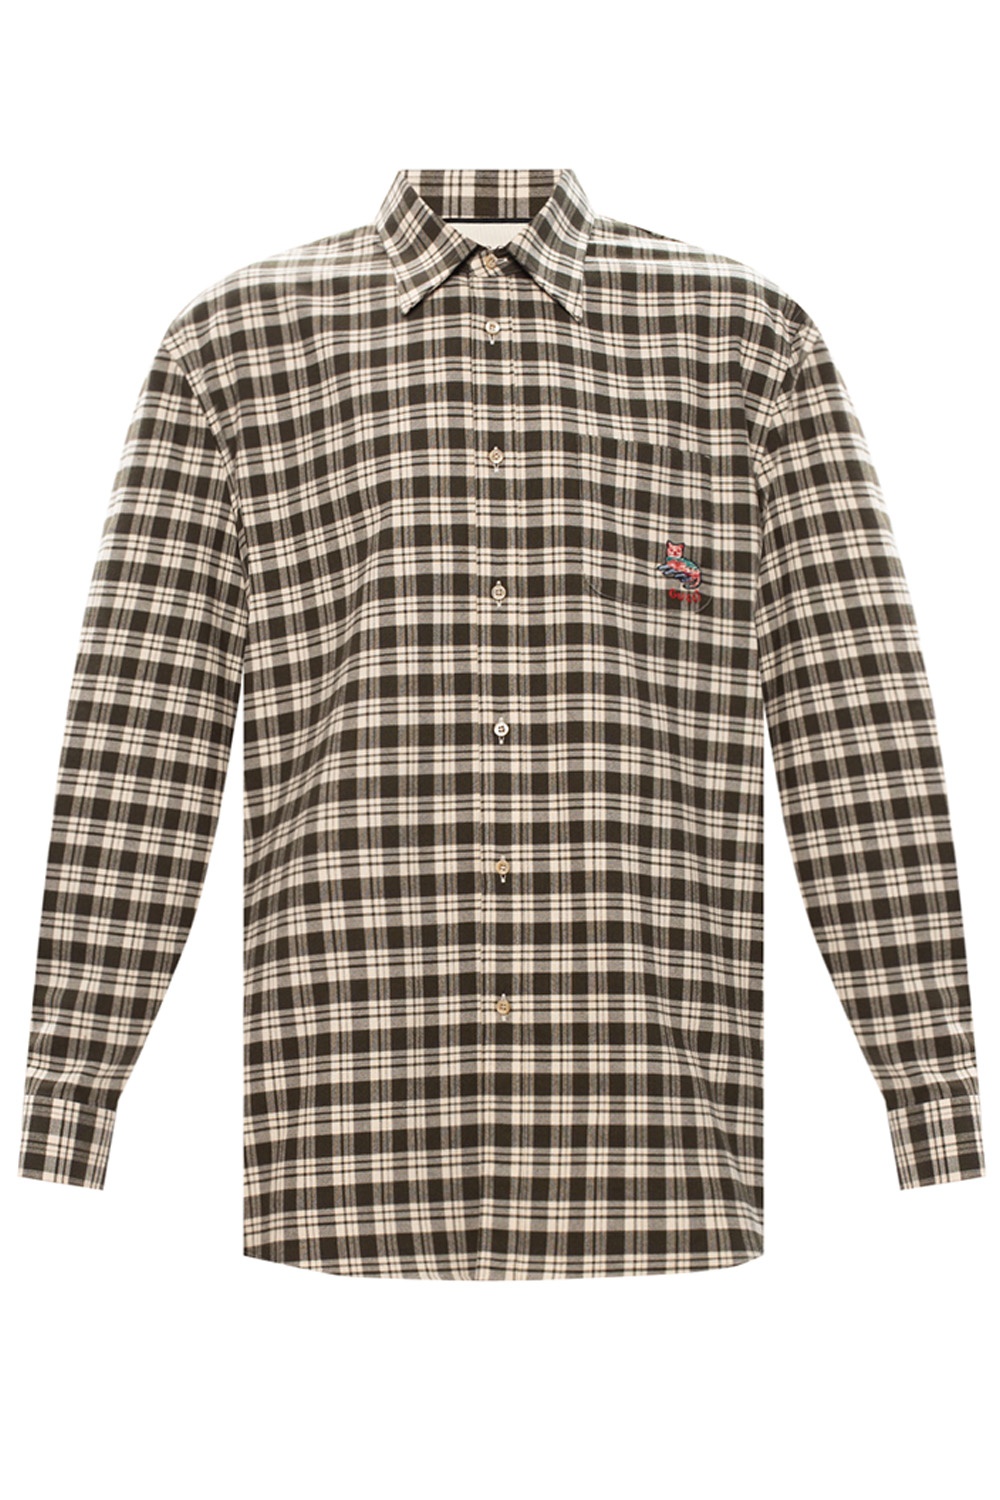 gucci checkered shirt